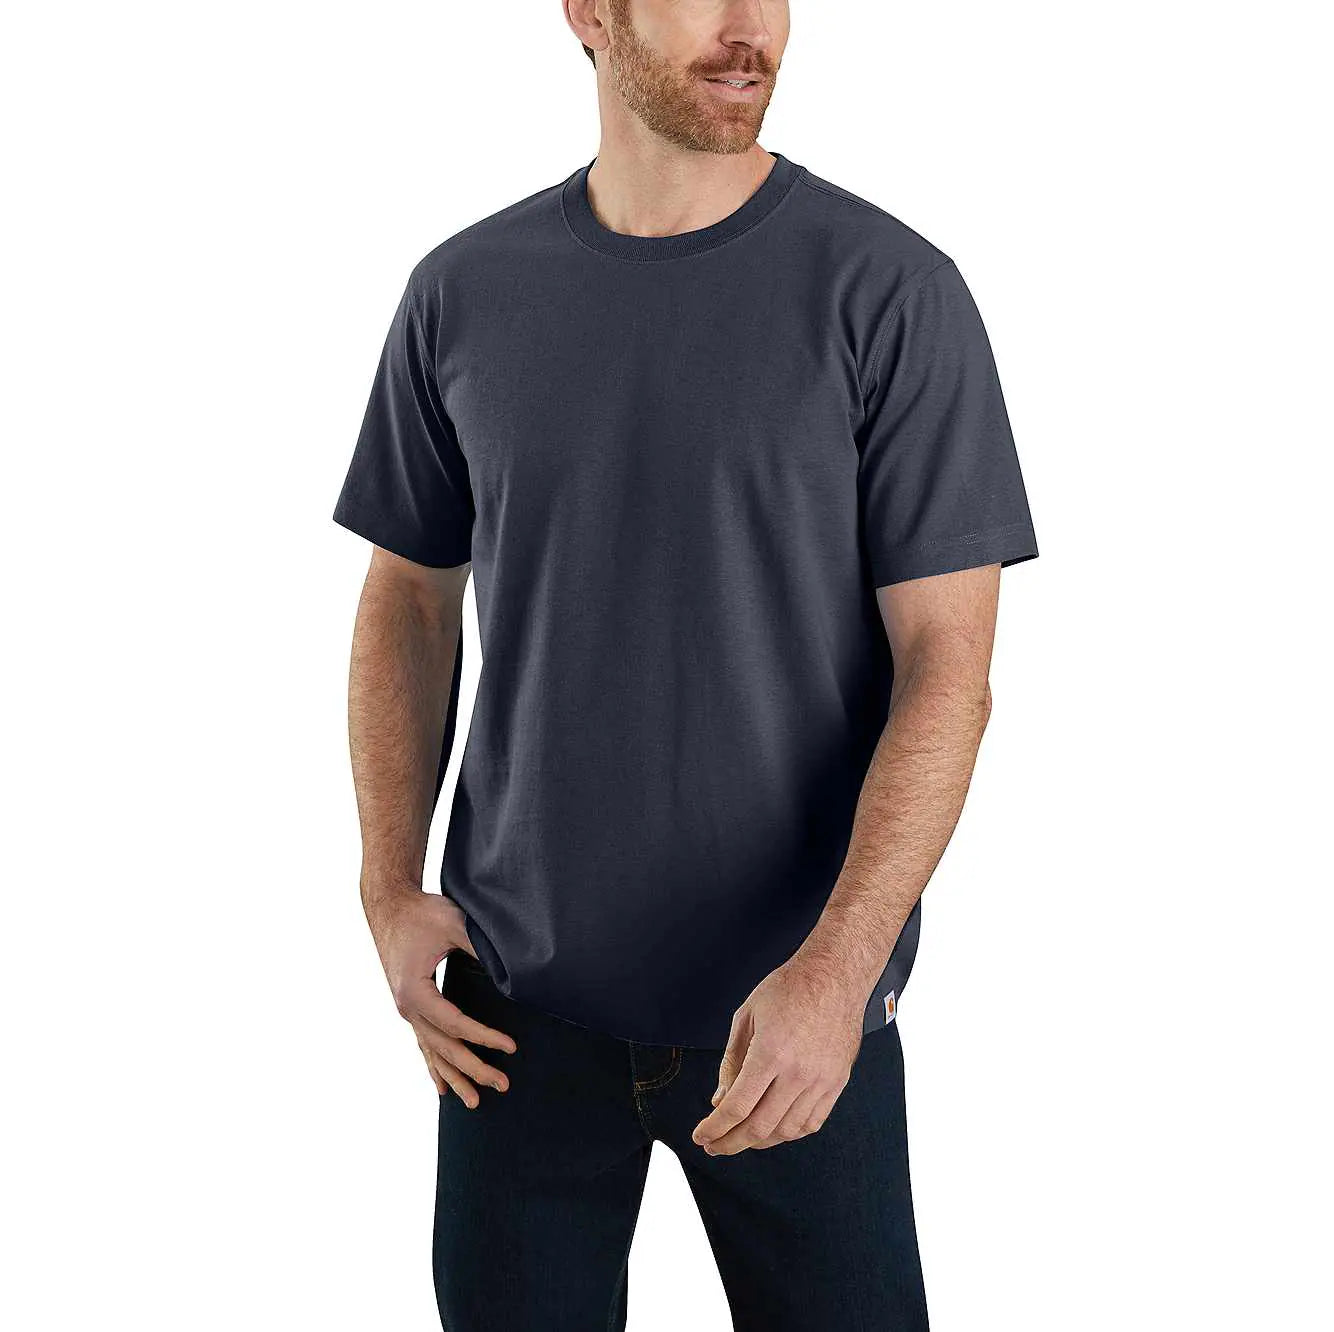 CHA-D4 (Carhartt workwear solid t-shirt navy) 32292018 CARHARTT